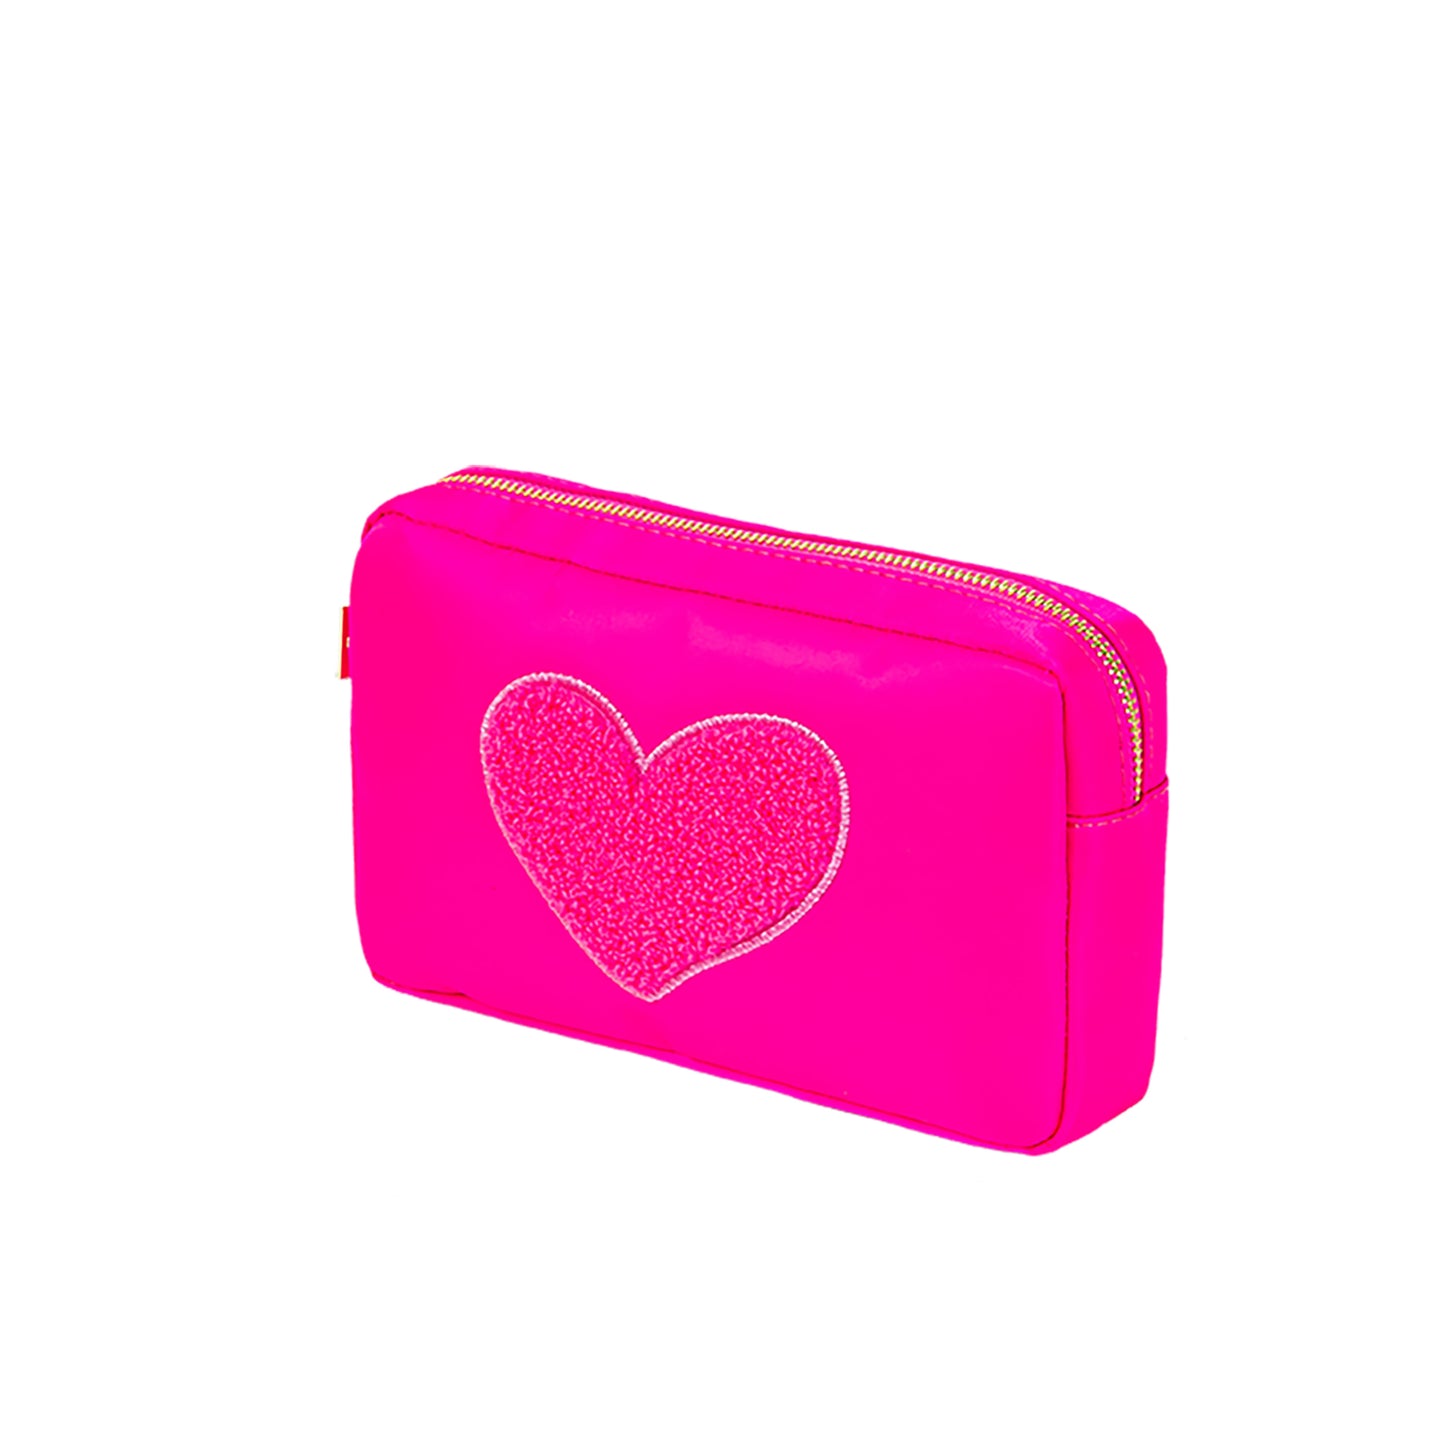 Medium Hot Pink Heart Cosmetic Bag: Hot Pink